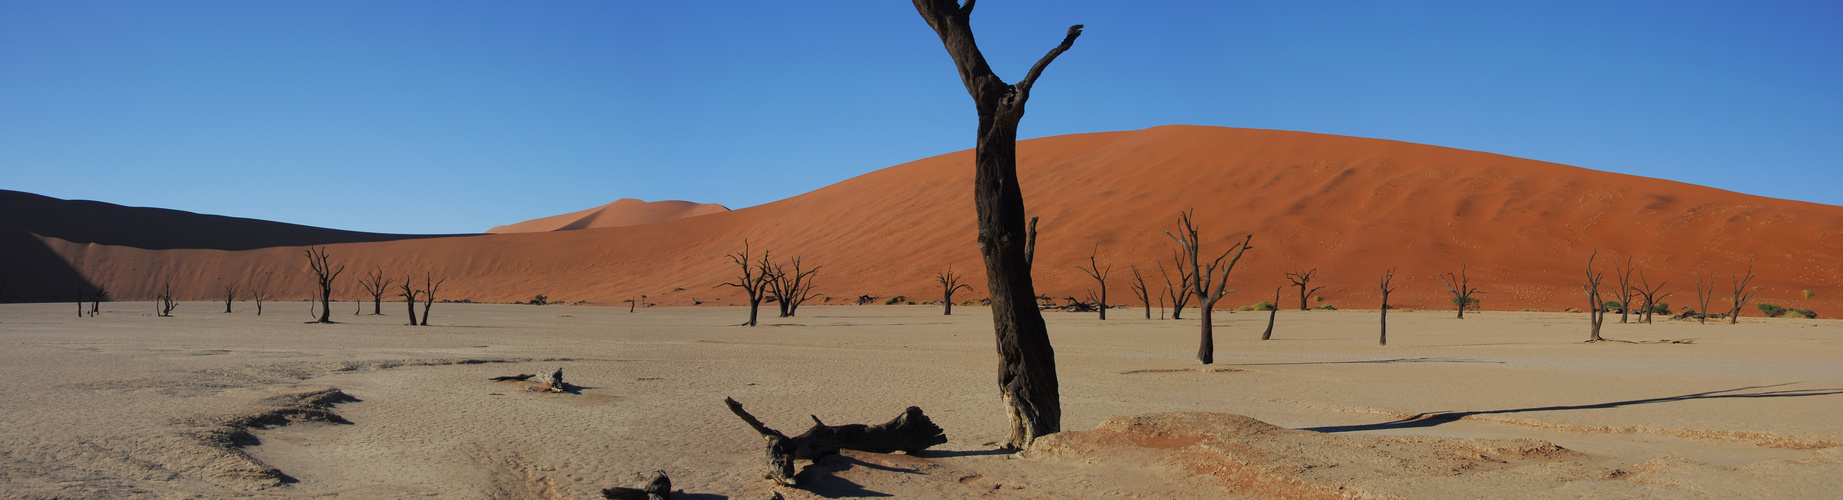 DeadVlei - Namib, Sesriem